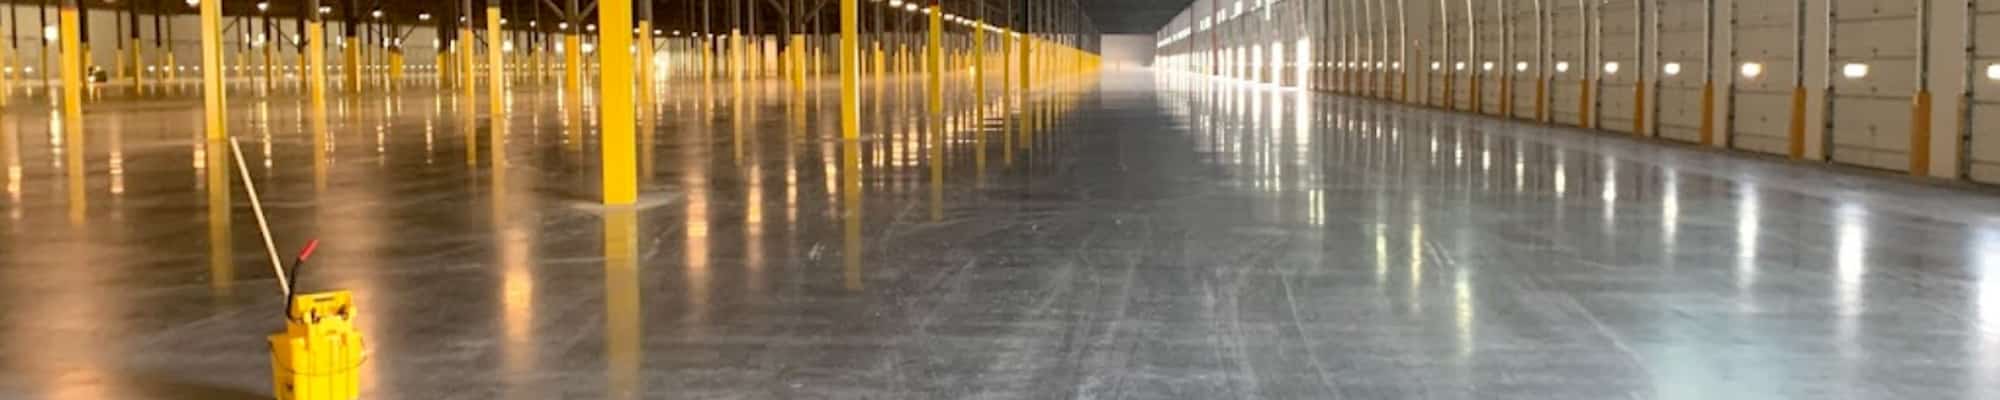 Alpharetta, Georgia – Commercial Floor Cleaning